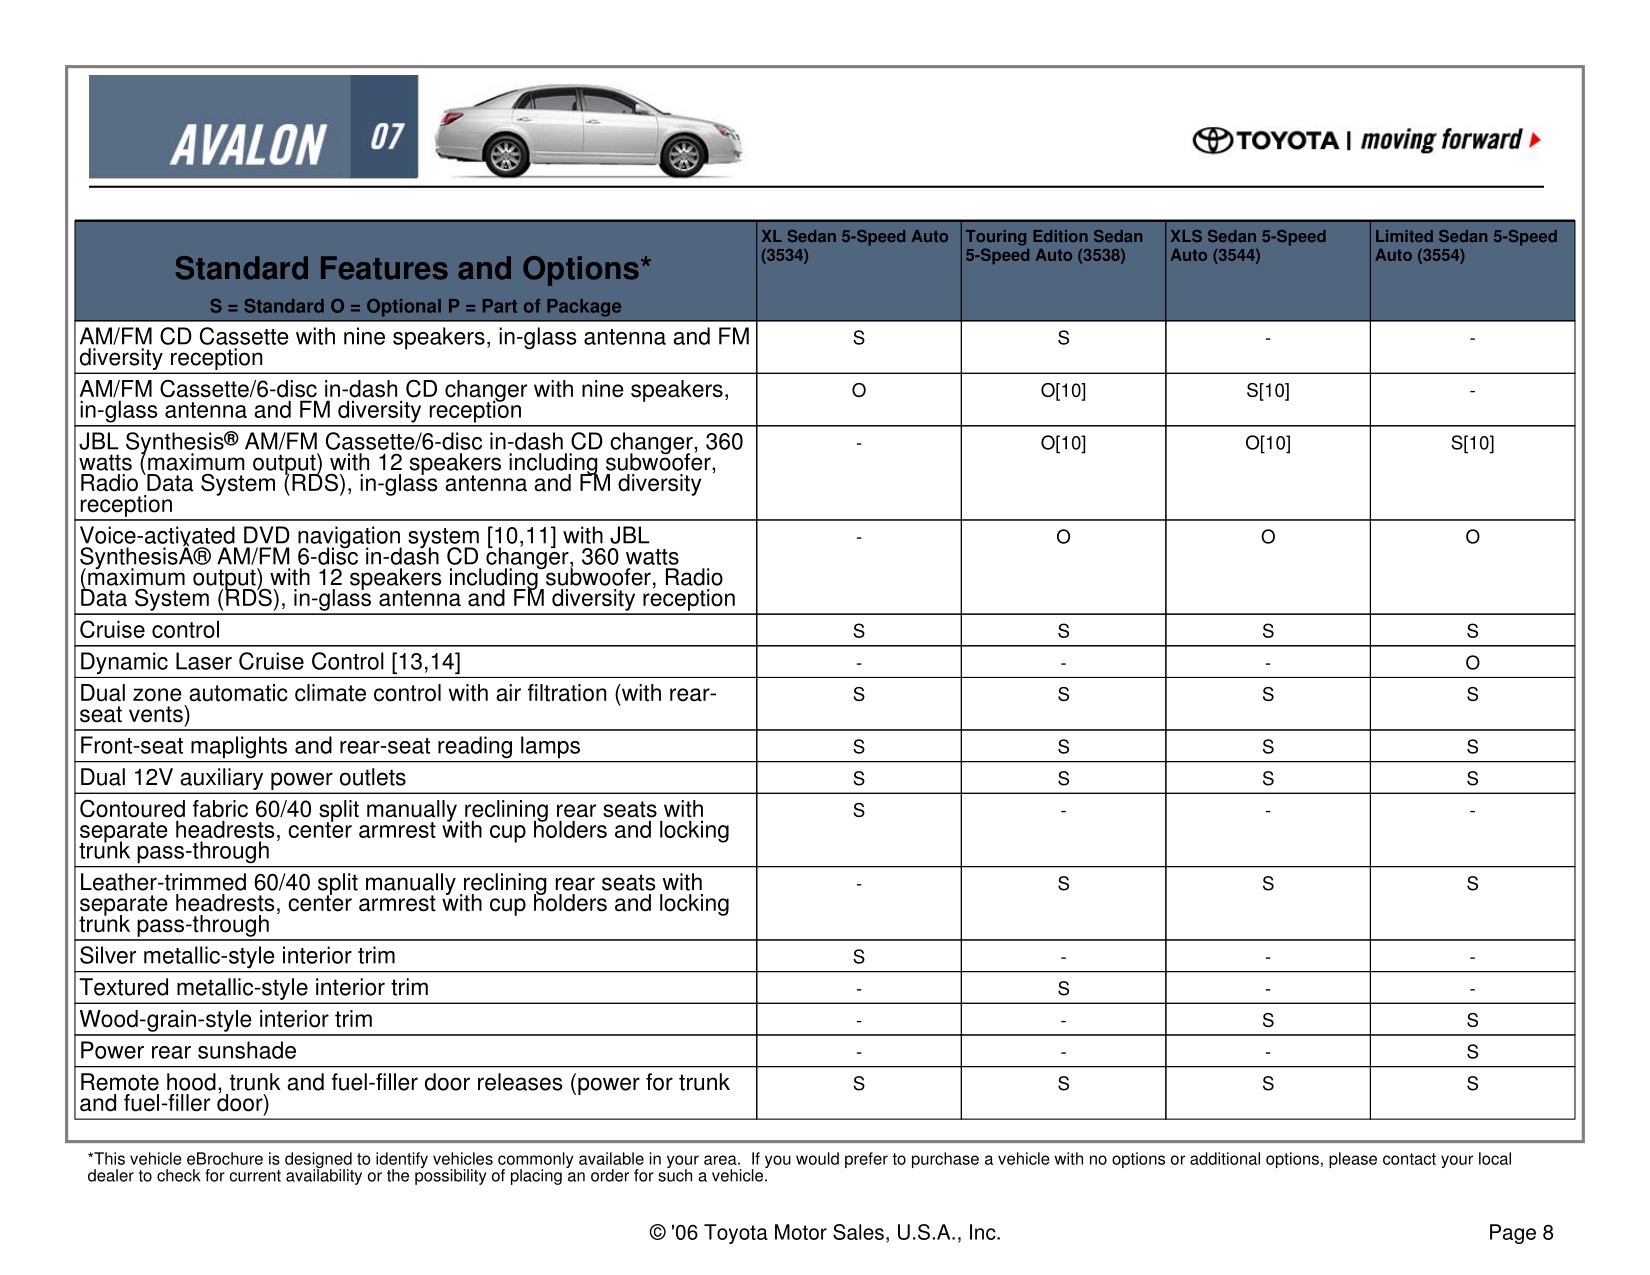 2007 Toyota Avalon Brochure Page 9